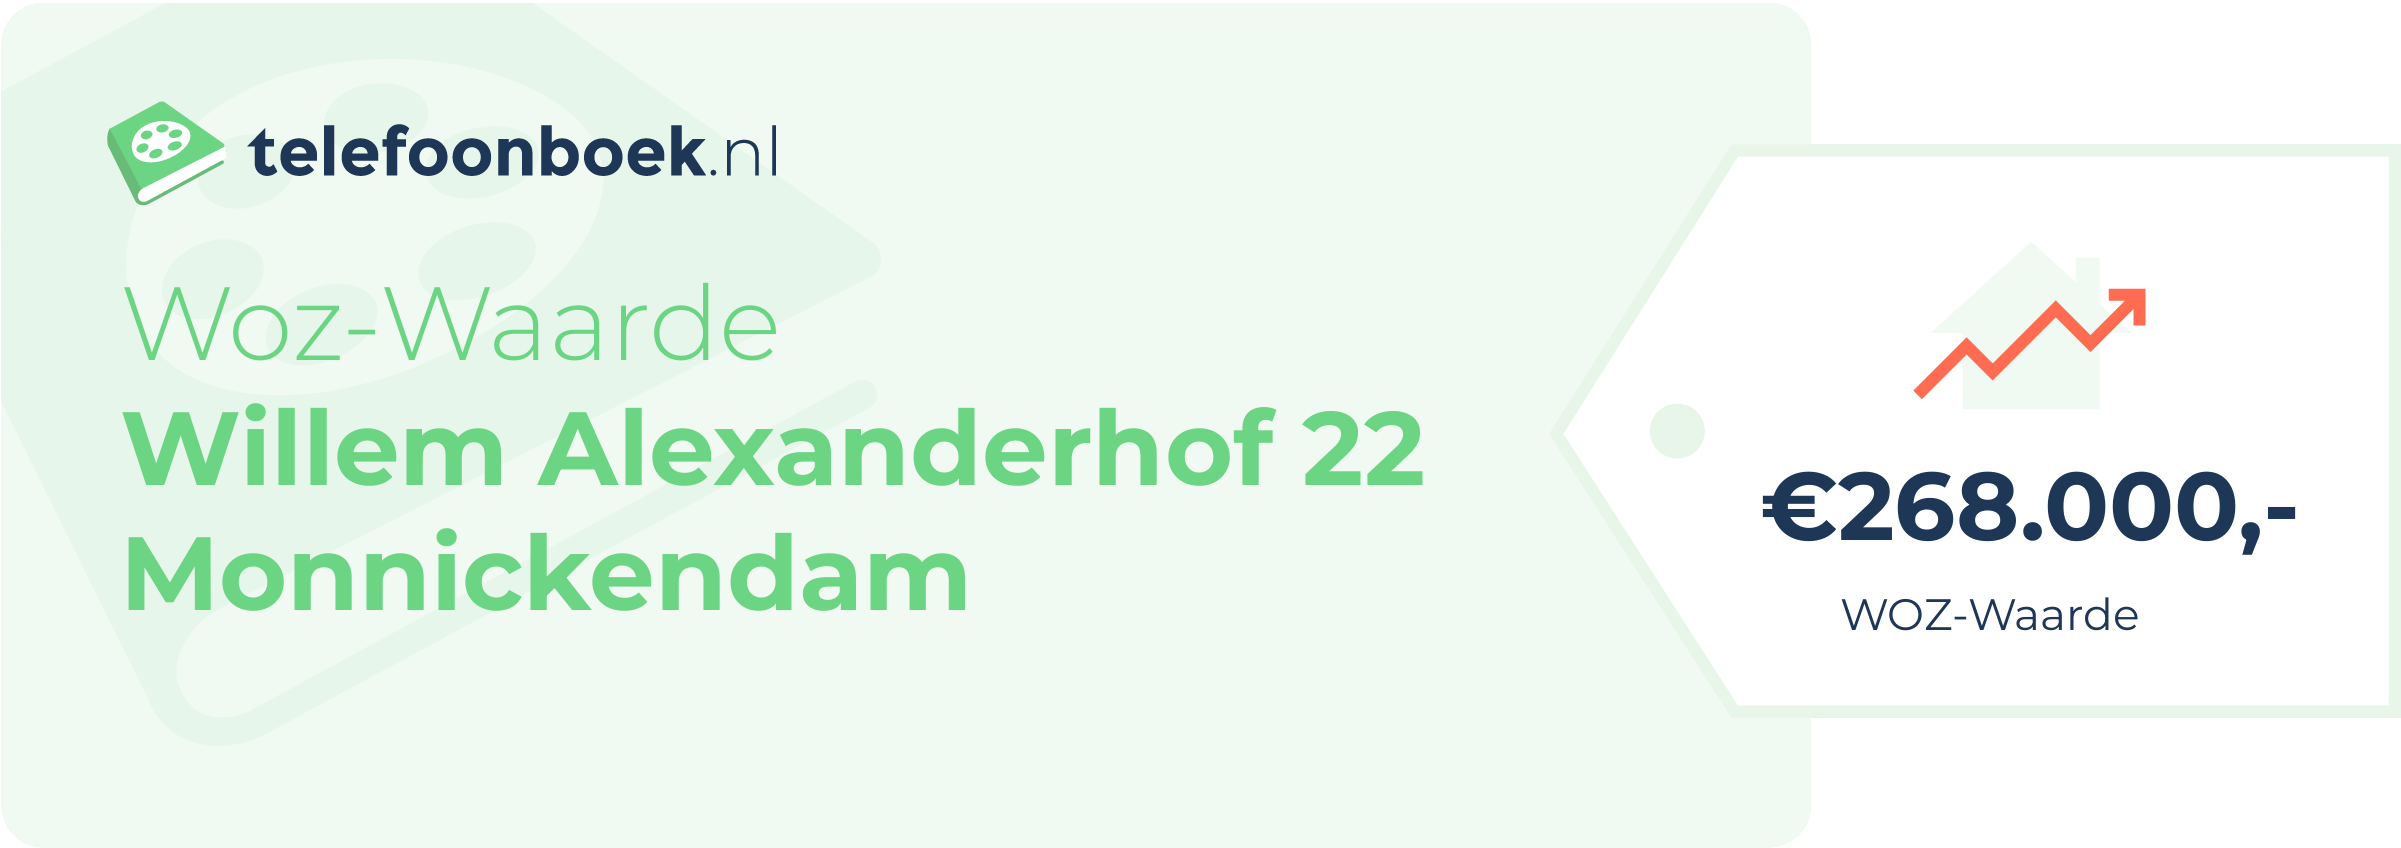 WOZ-waarde Willem Alexanderhof 22 Monnickendam